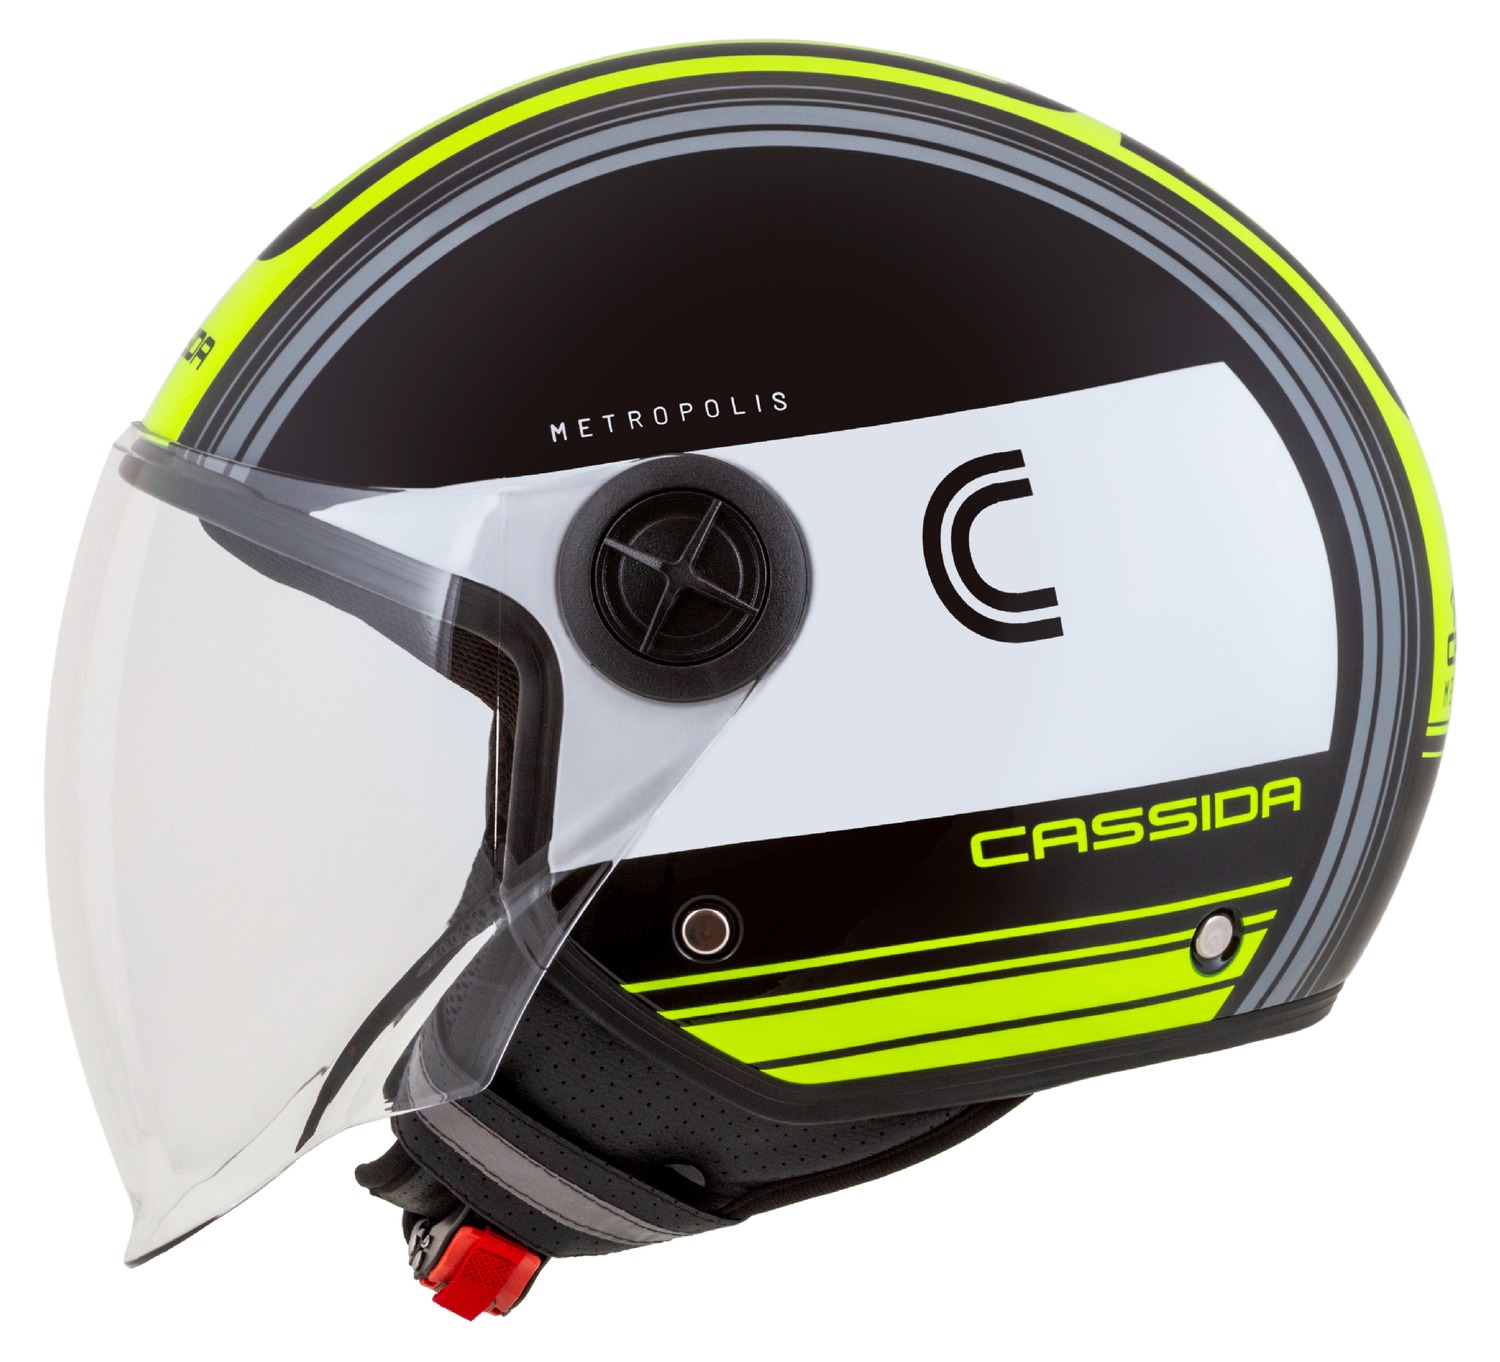 helmet Handy Metropolis, CASSIDA (black/white/yellow fluo/grey) 2023